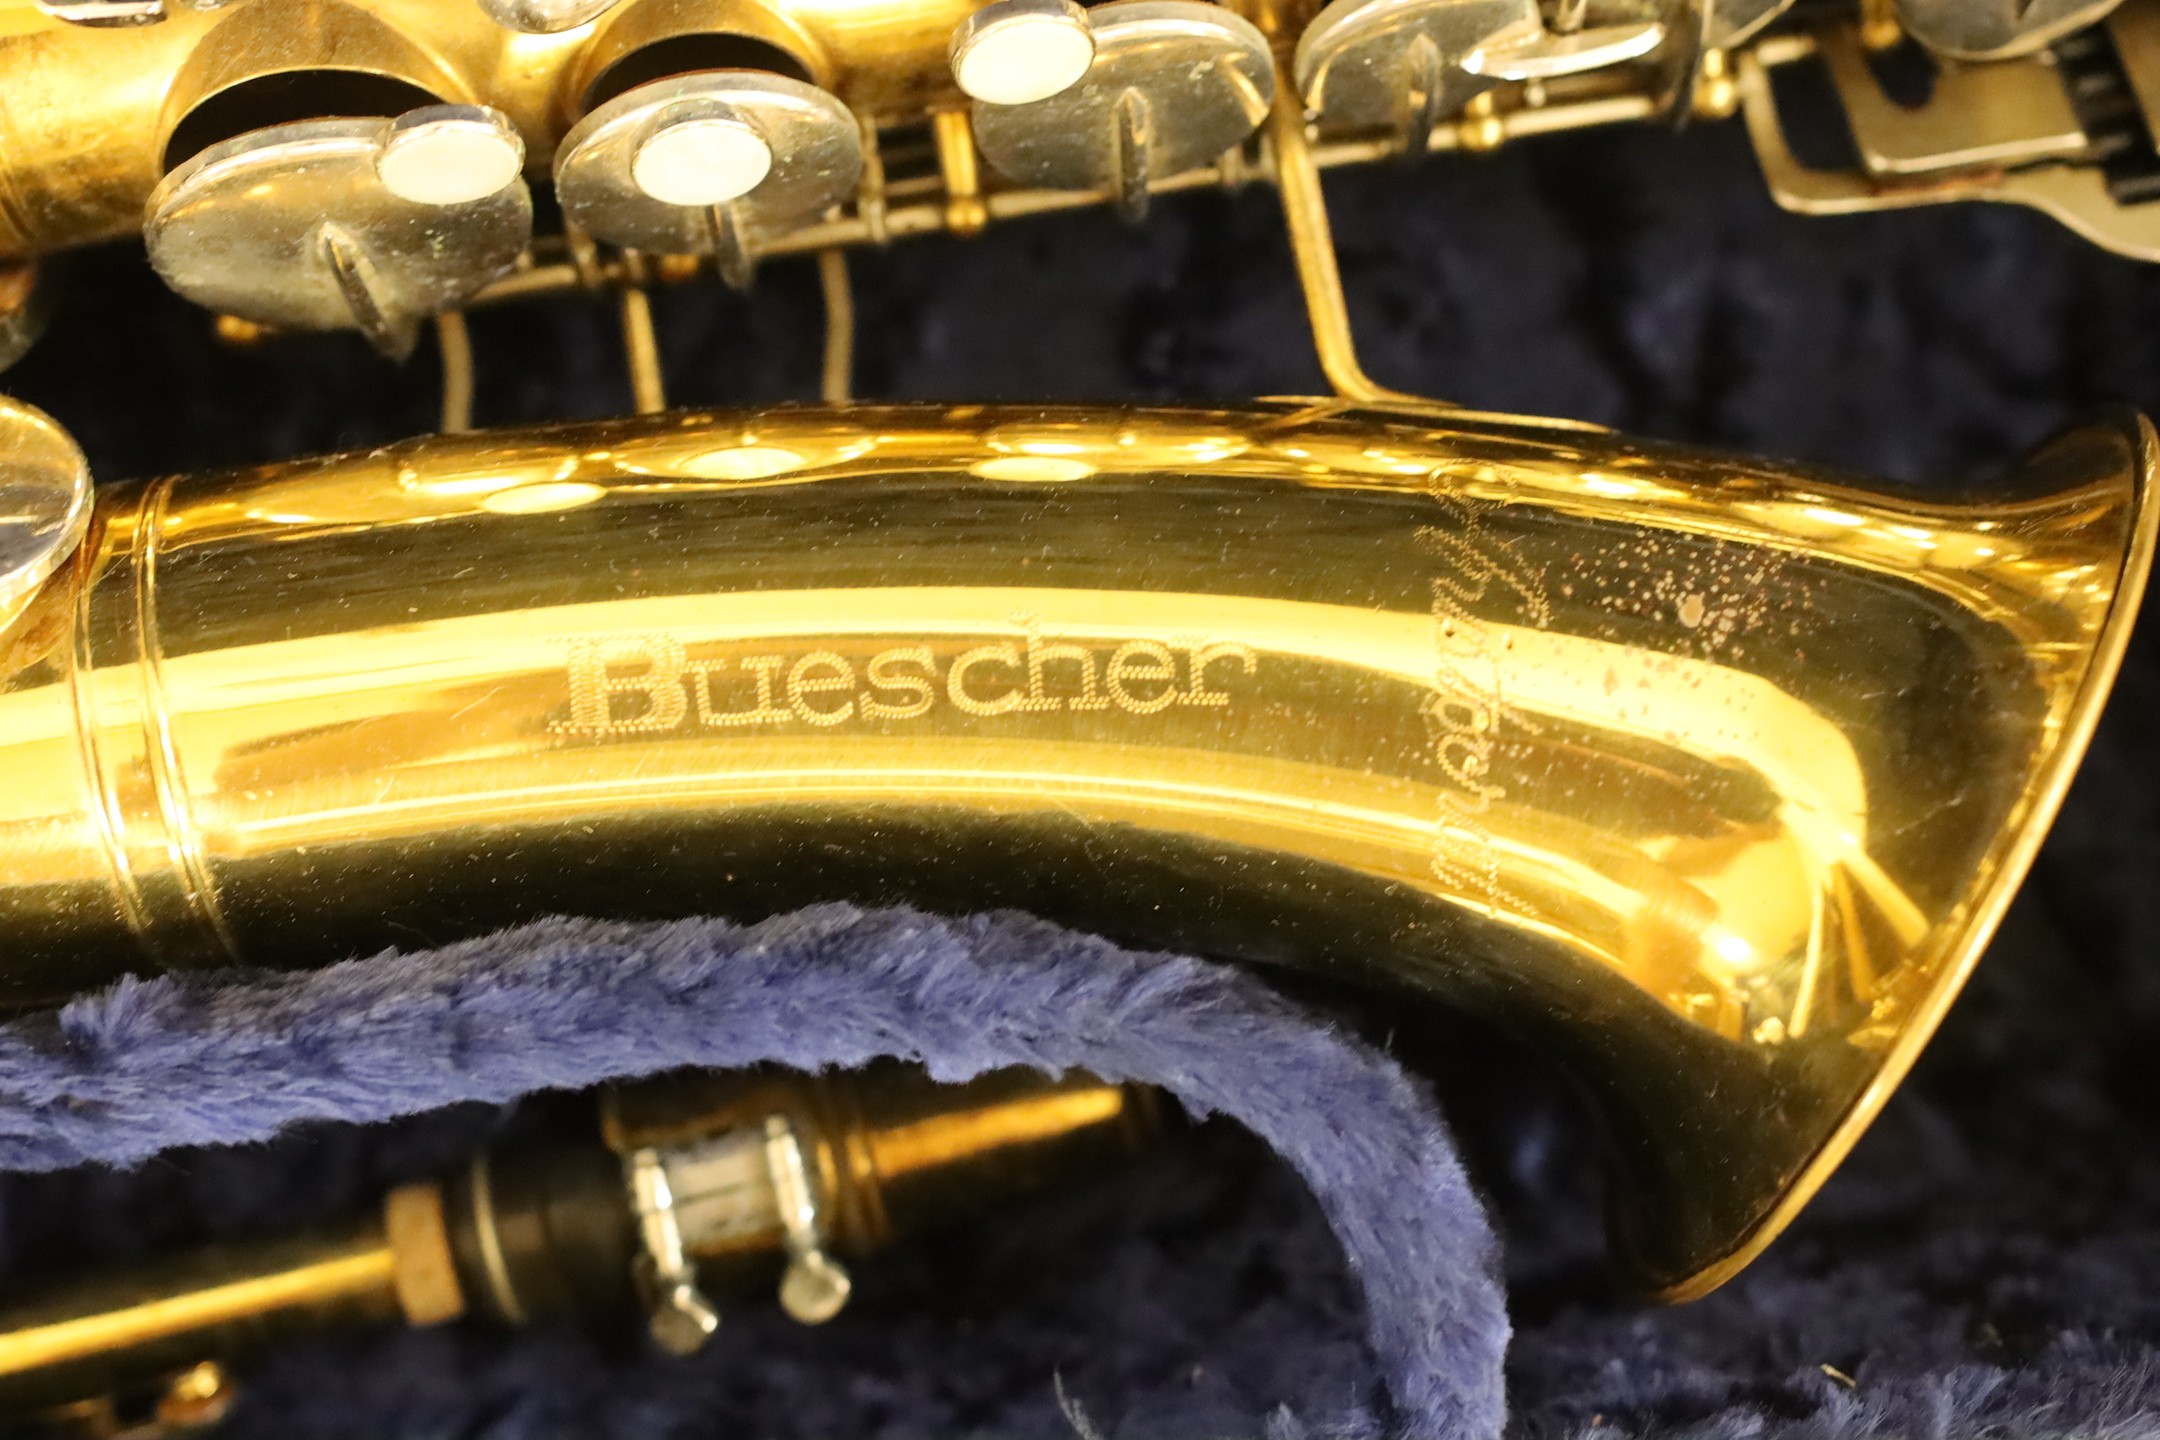 A Buescher Aristocrat saxophone, cased